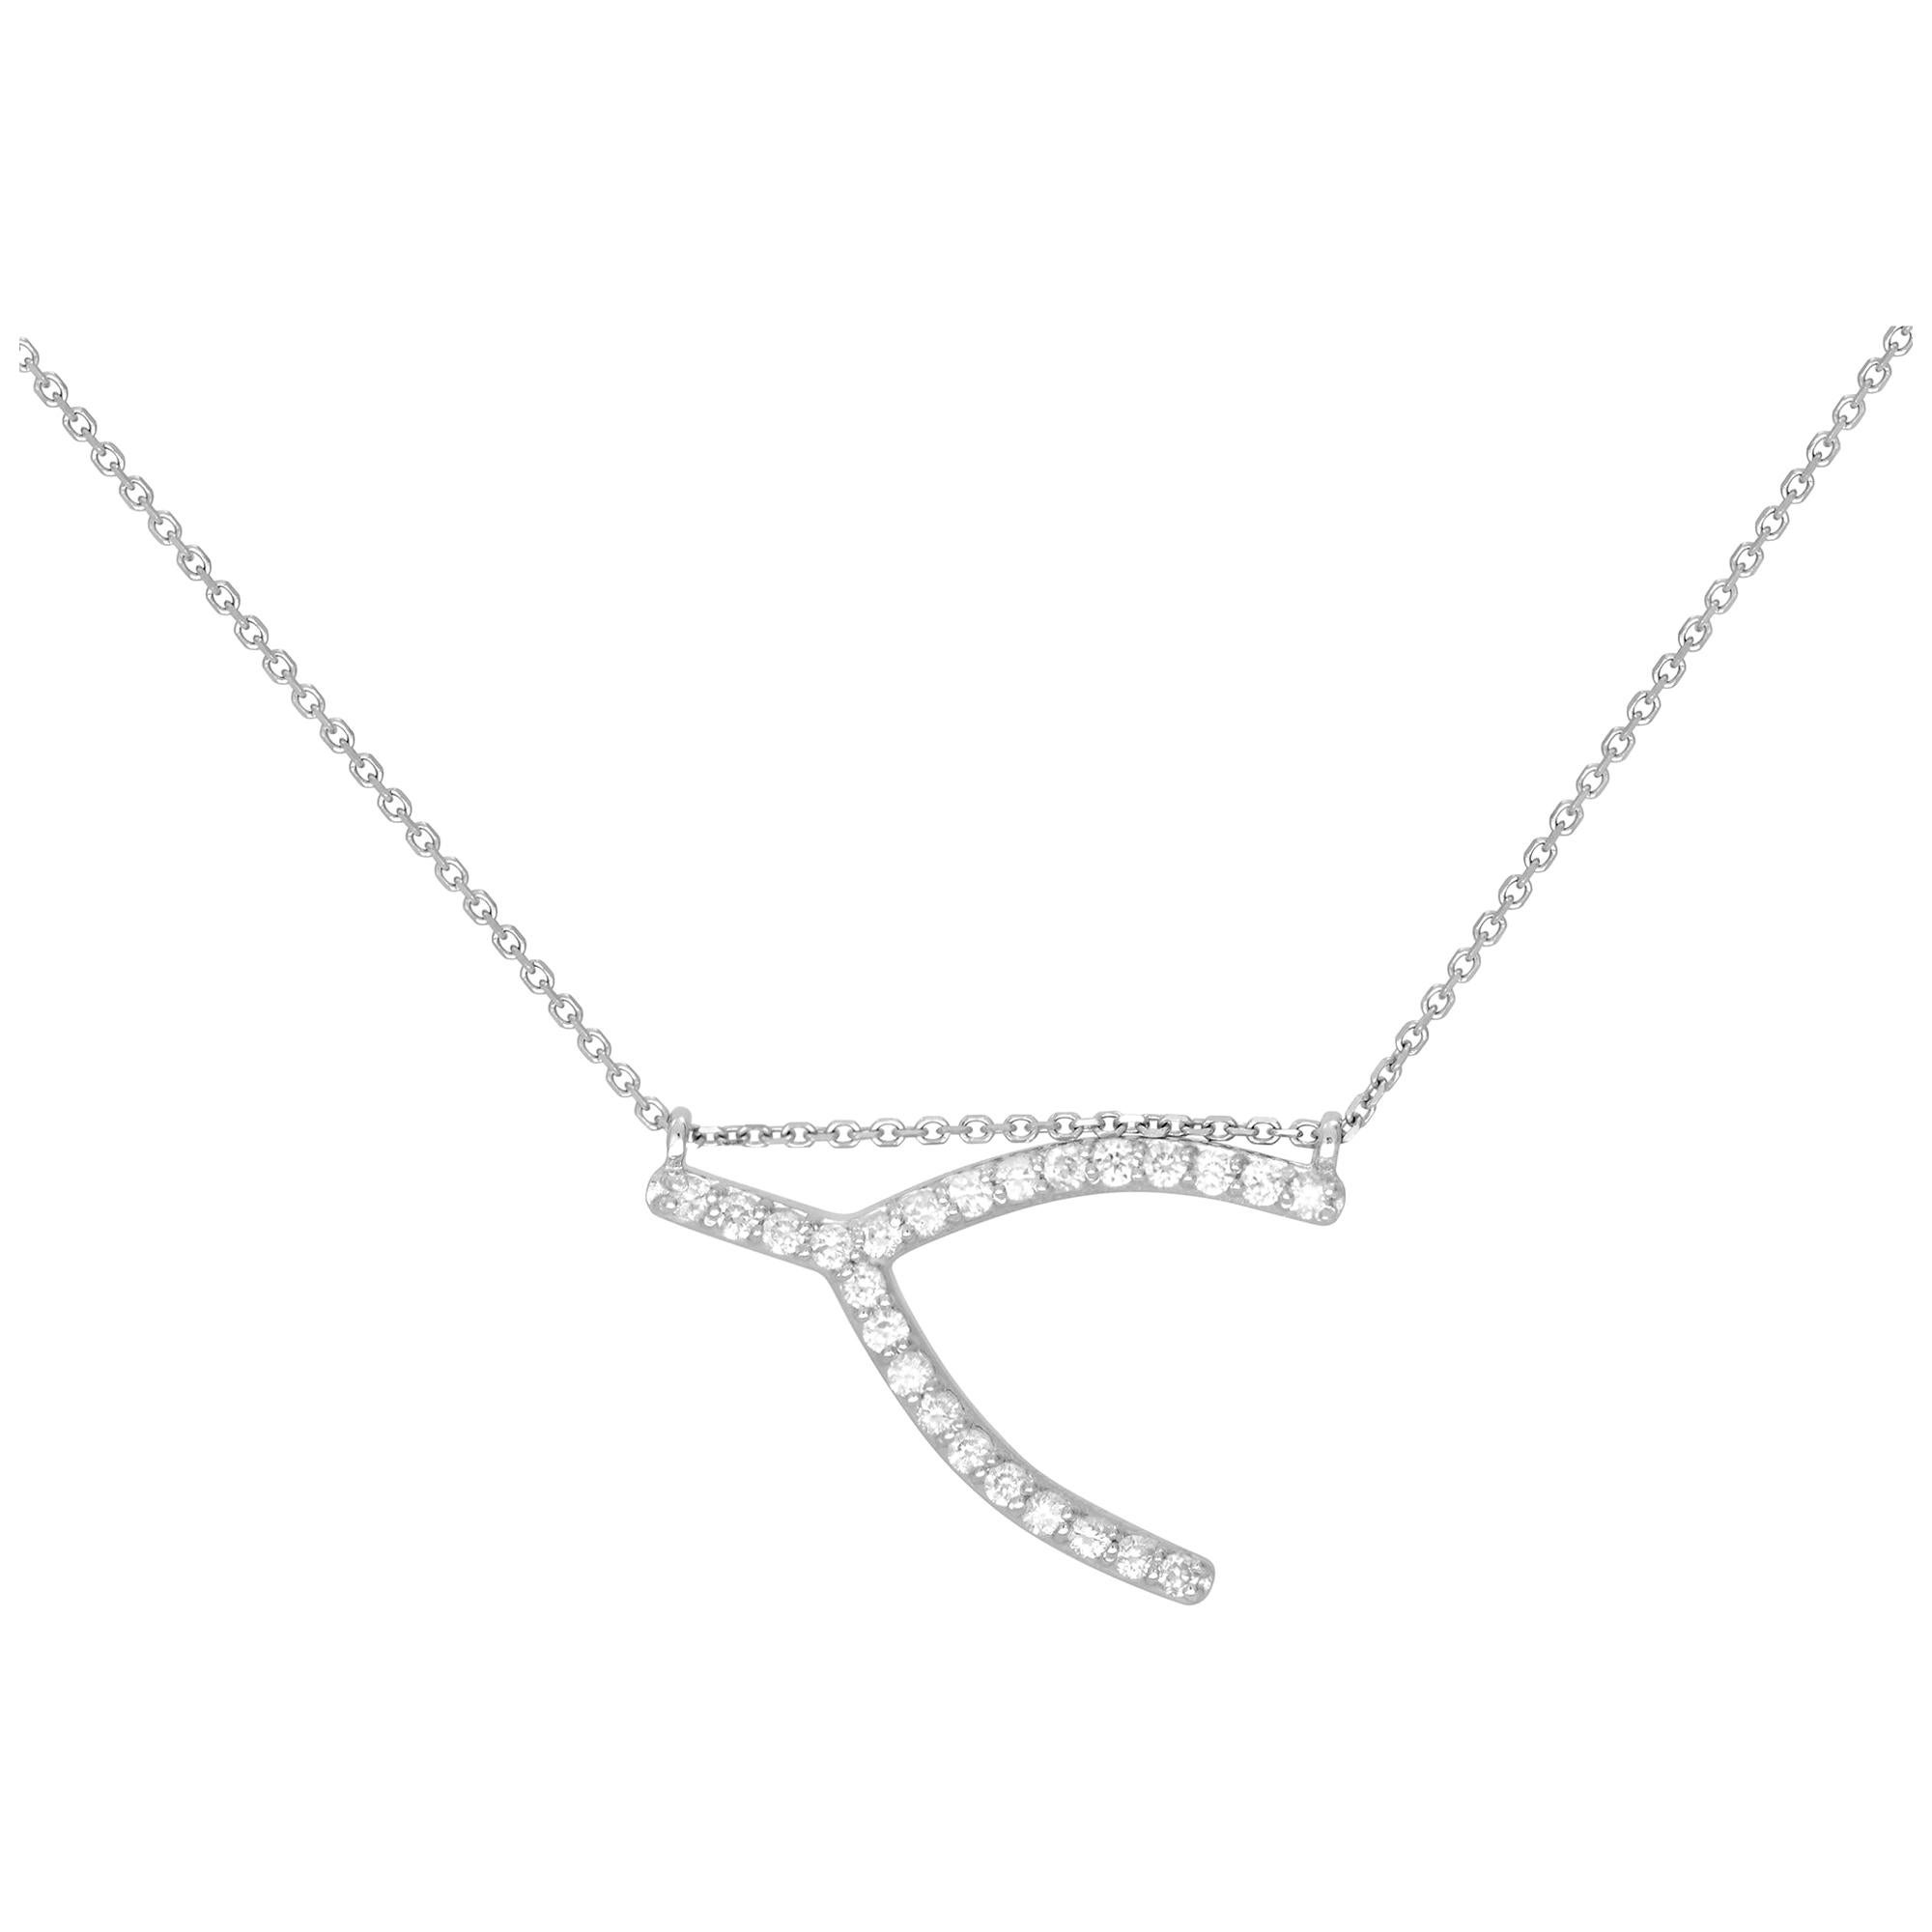 Rachel Koen 14K White Gold Sideways Wishbone Necklace 0.24cttw For Sale